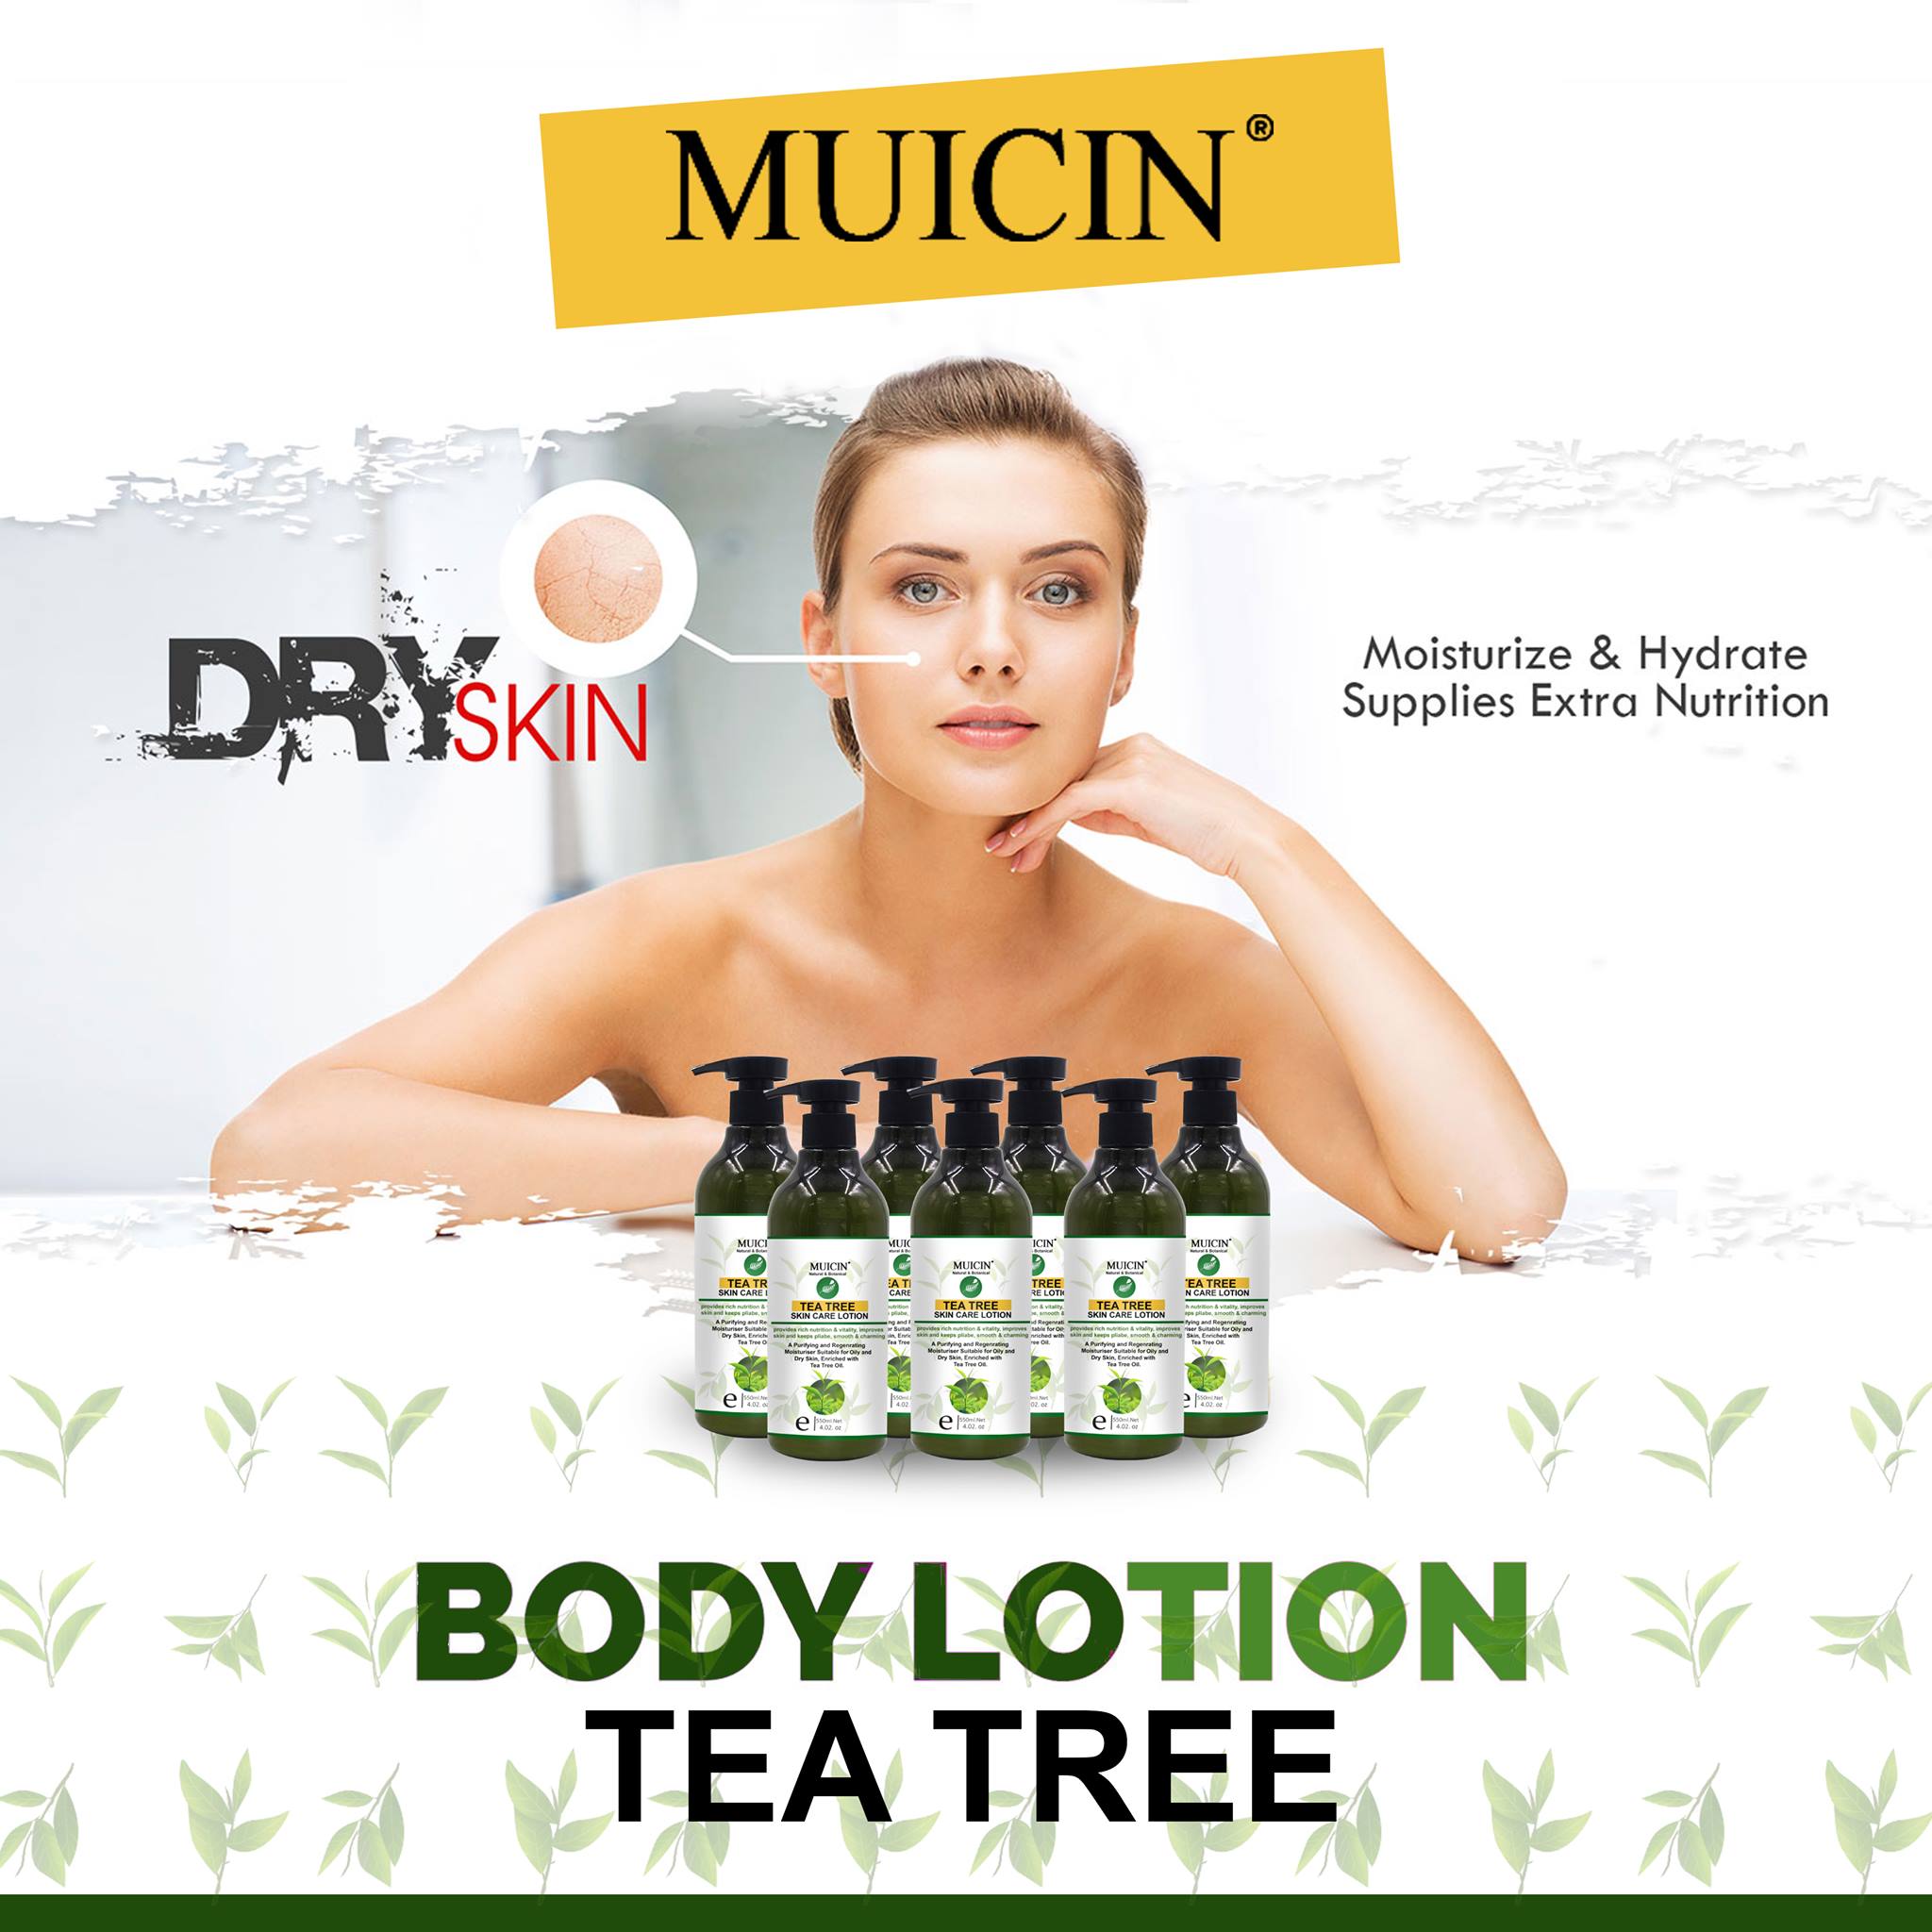 MUICIN - Tea Tree Skin Care Body Lotion - 550ml